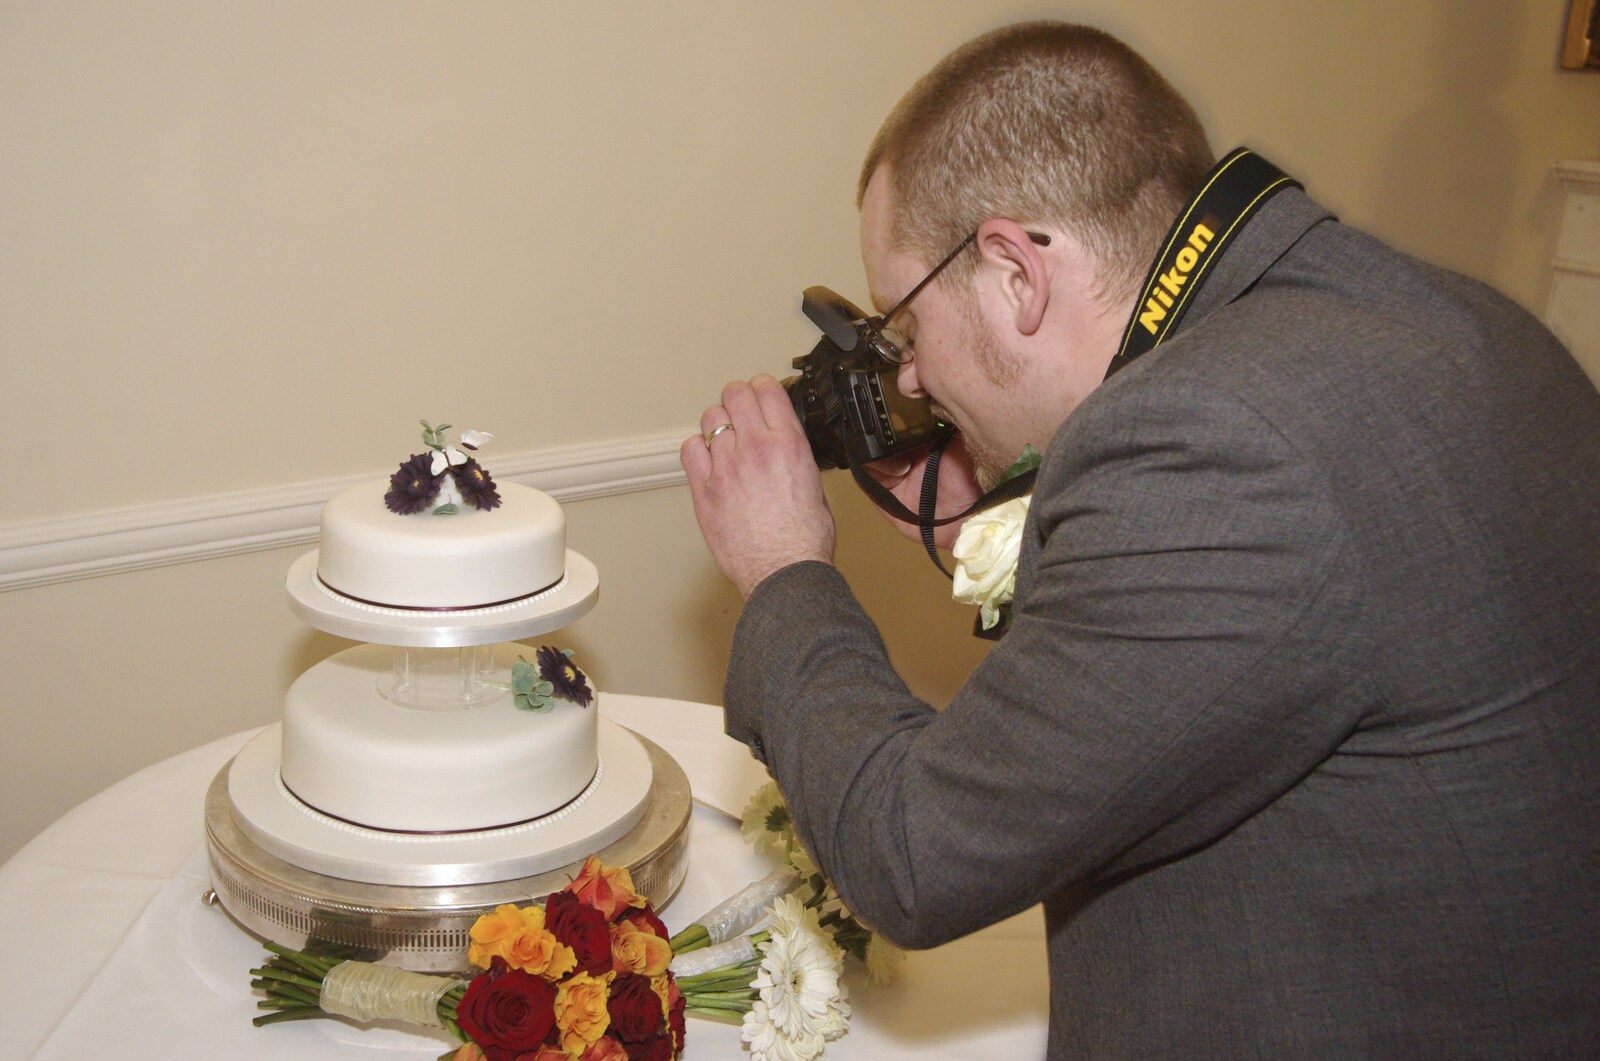 Matt and Emma's Wedding, Quendon, Essex - 7th November 2008: Matt takes a photo of the cake